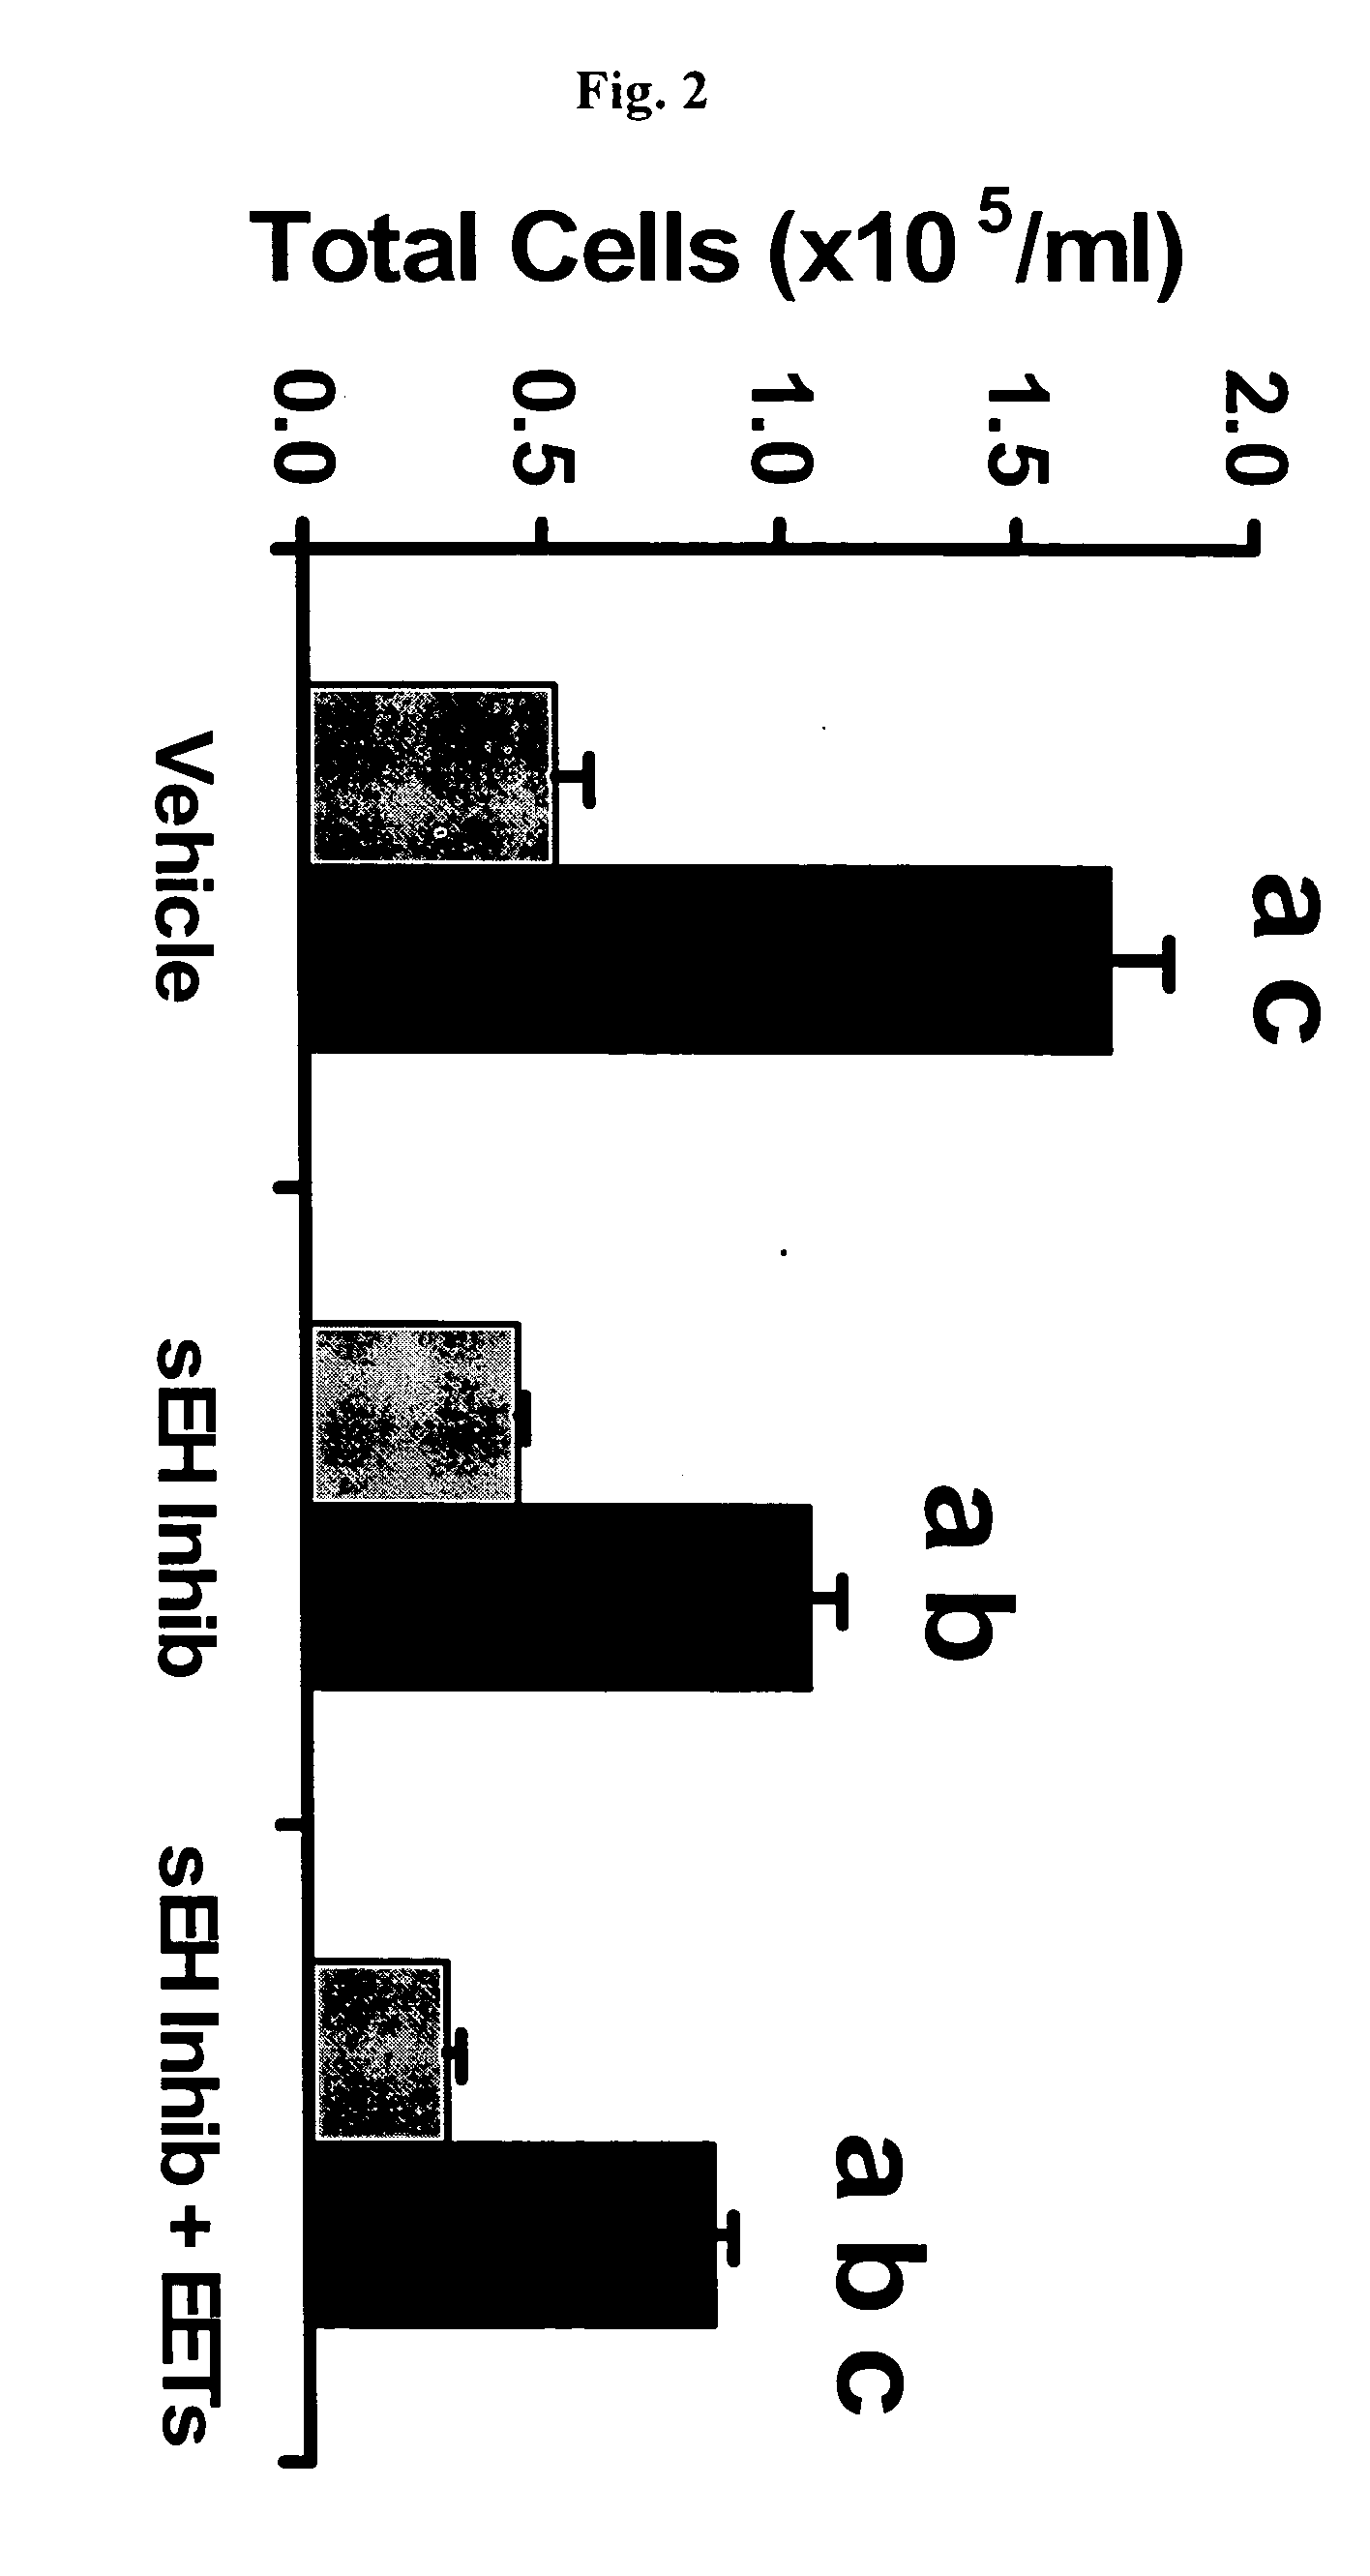 Use of cis-Epoxyeicosantrienoic acids and inhibitors of soluble epoxide hydrolase to reduce pulmonary infiltration by neutrophils